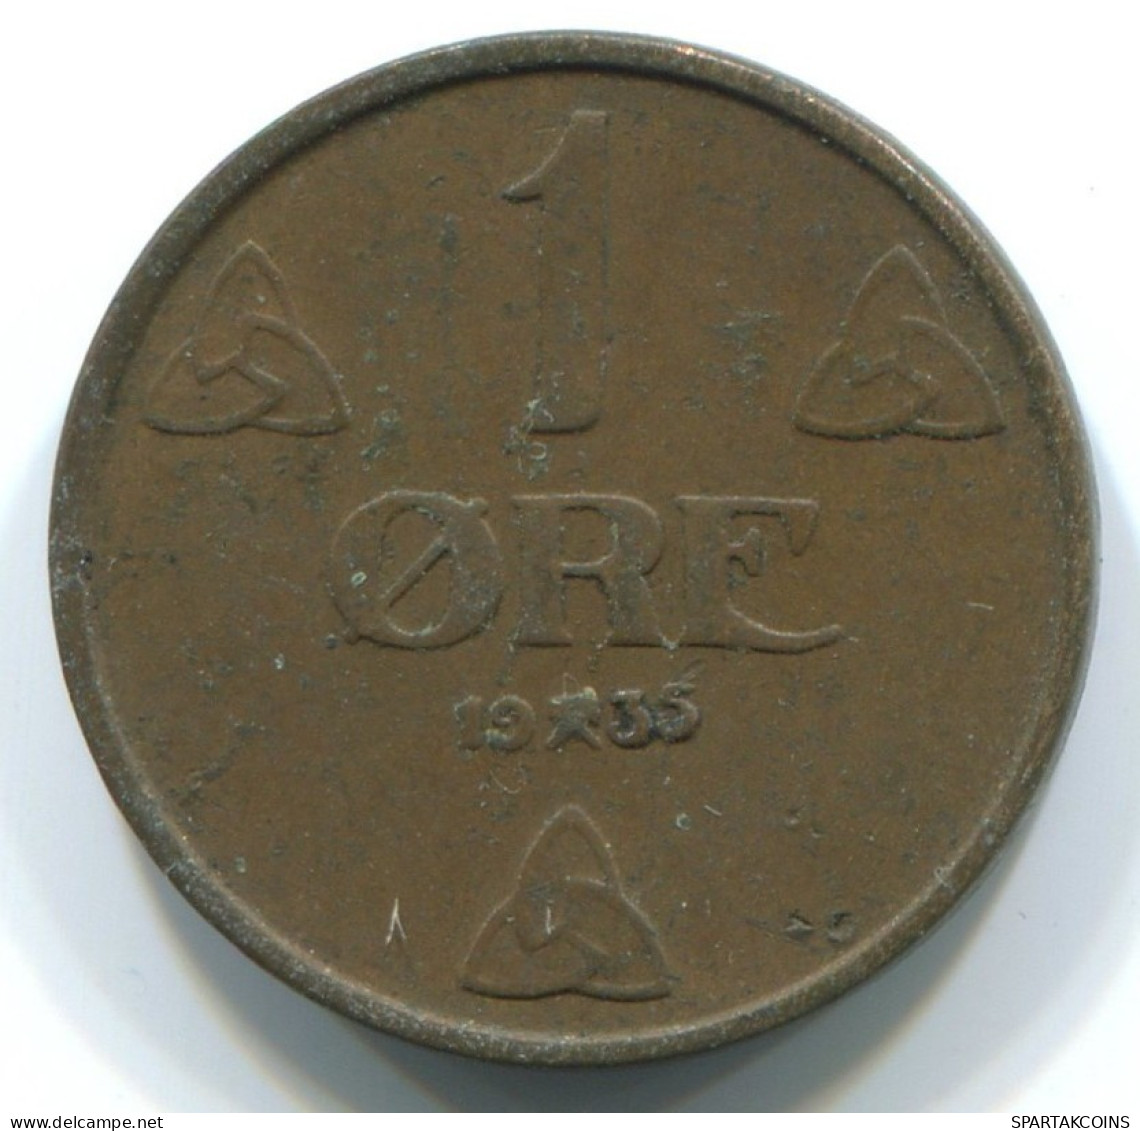 1 ORE 1935 NORWEGEN NORWAY Münze #WW1043.D.A - Norvegia